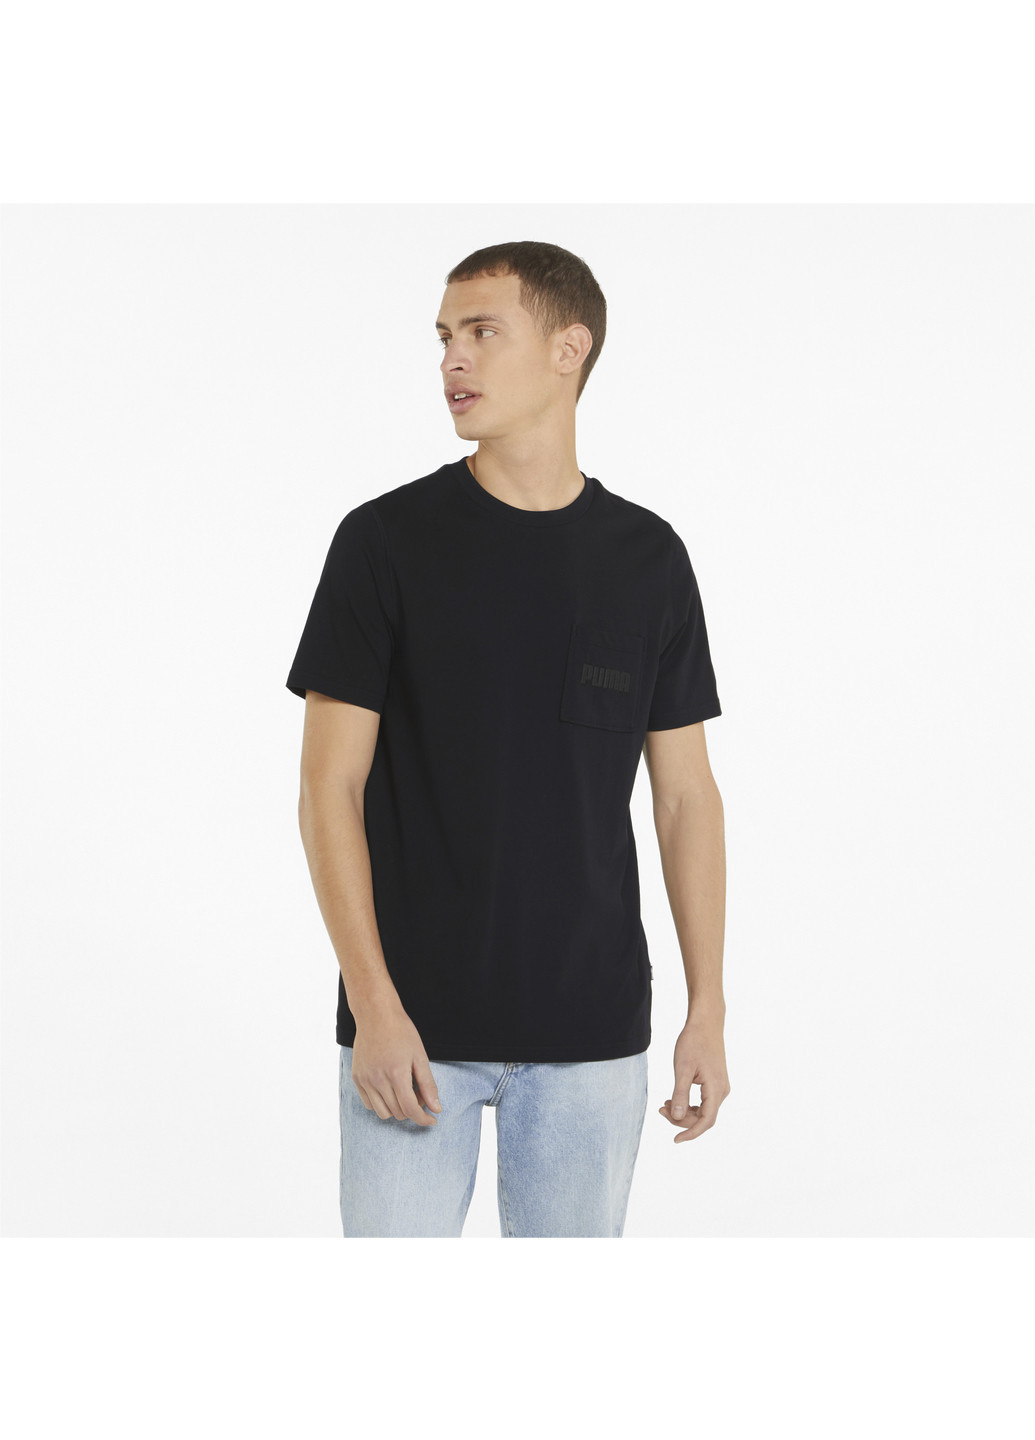 Черная футболка modern basics pocket men's tee Puma